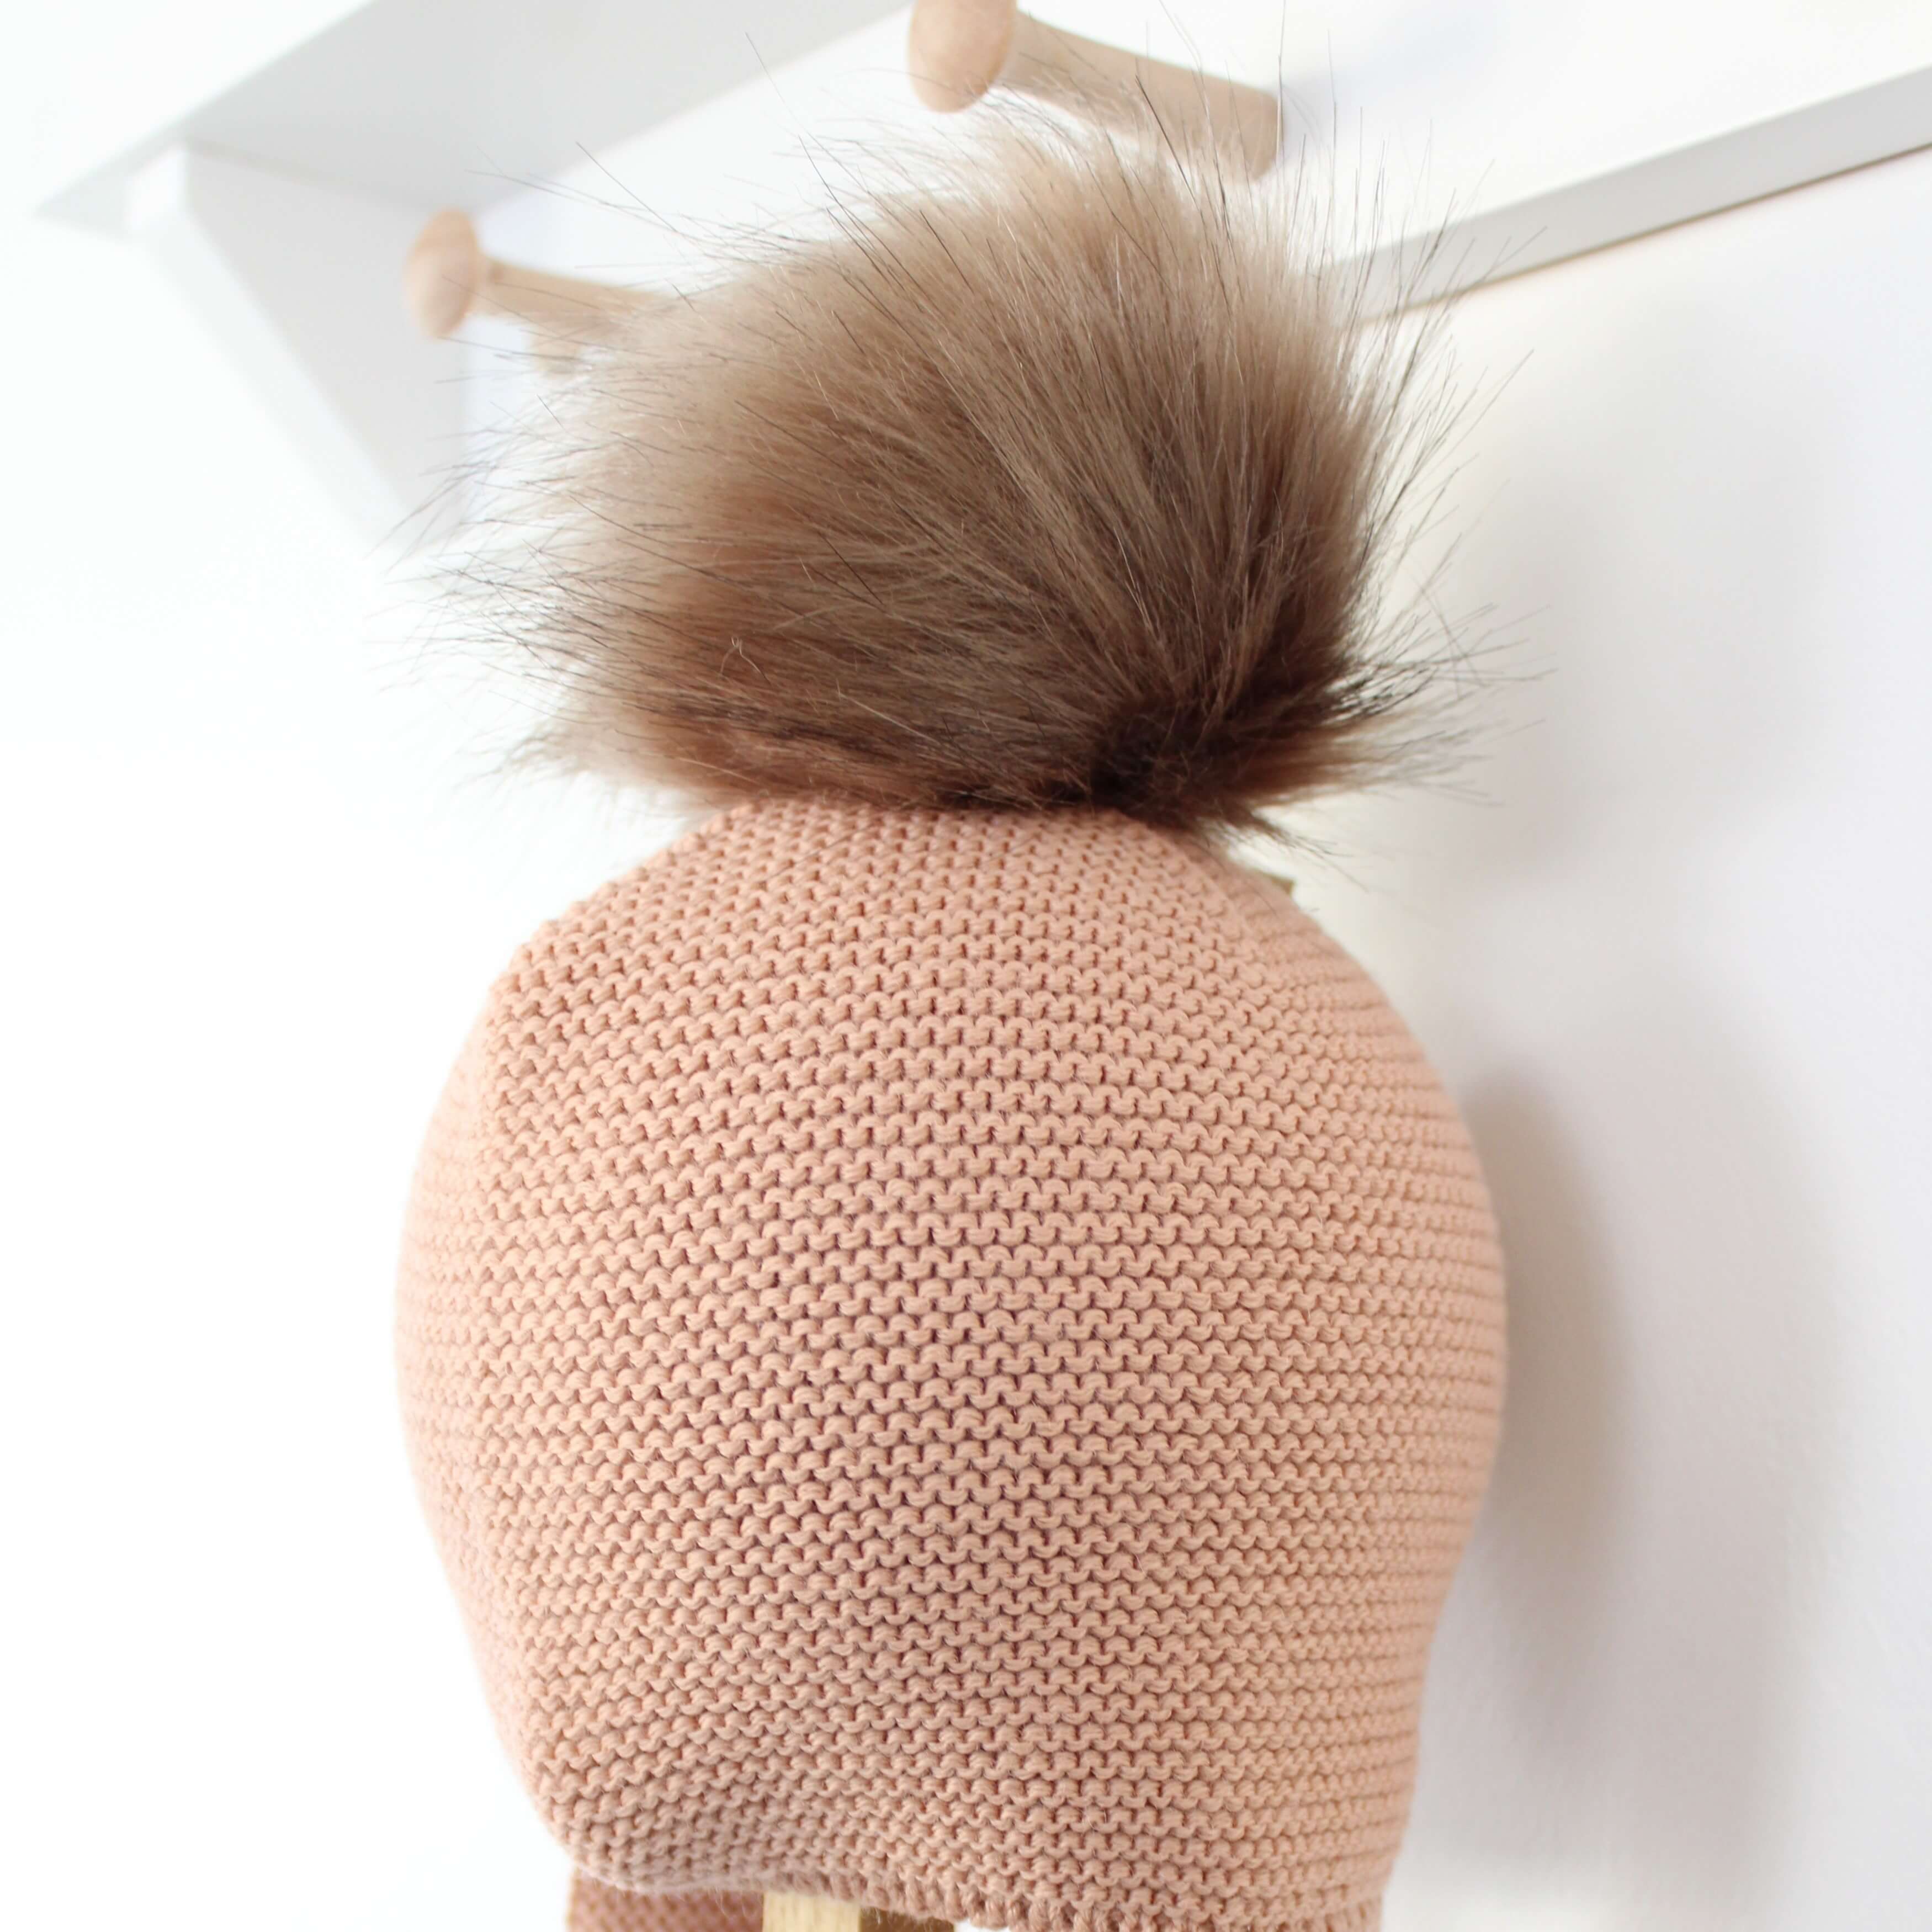 merino blend knit hat